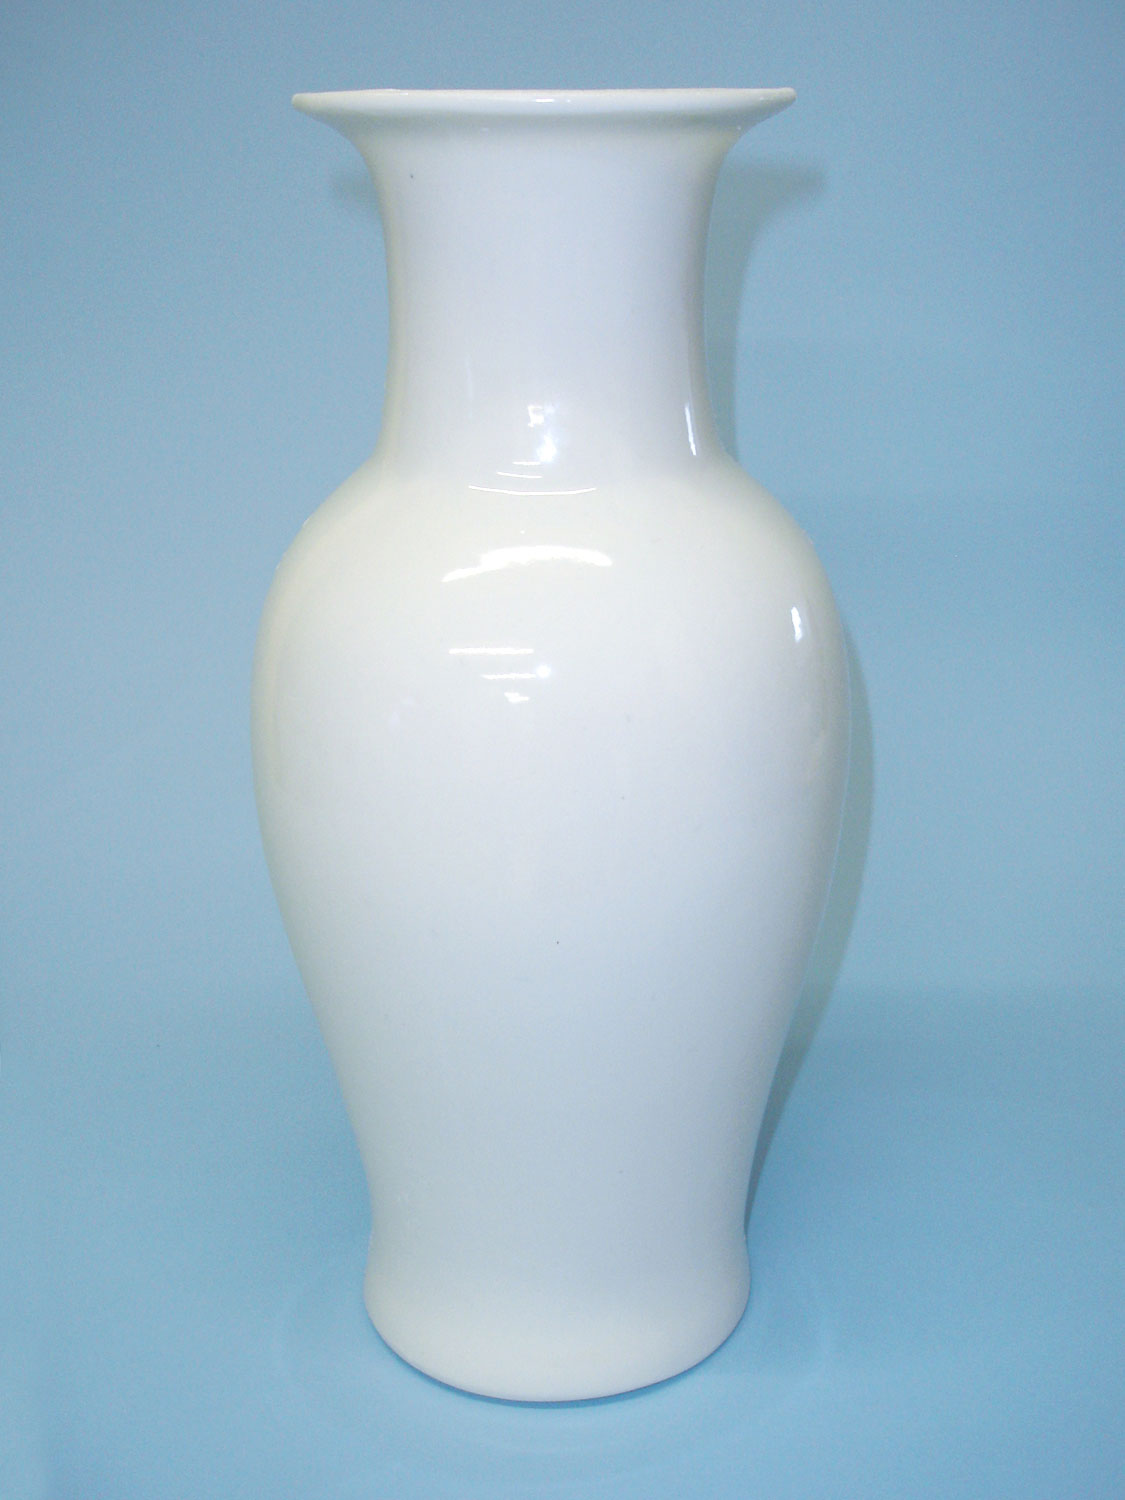 Vase for film production. Sugar glass China vase large, size 36.5 cm x 17.5 cm.